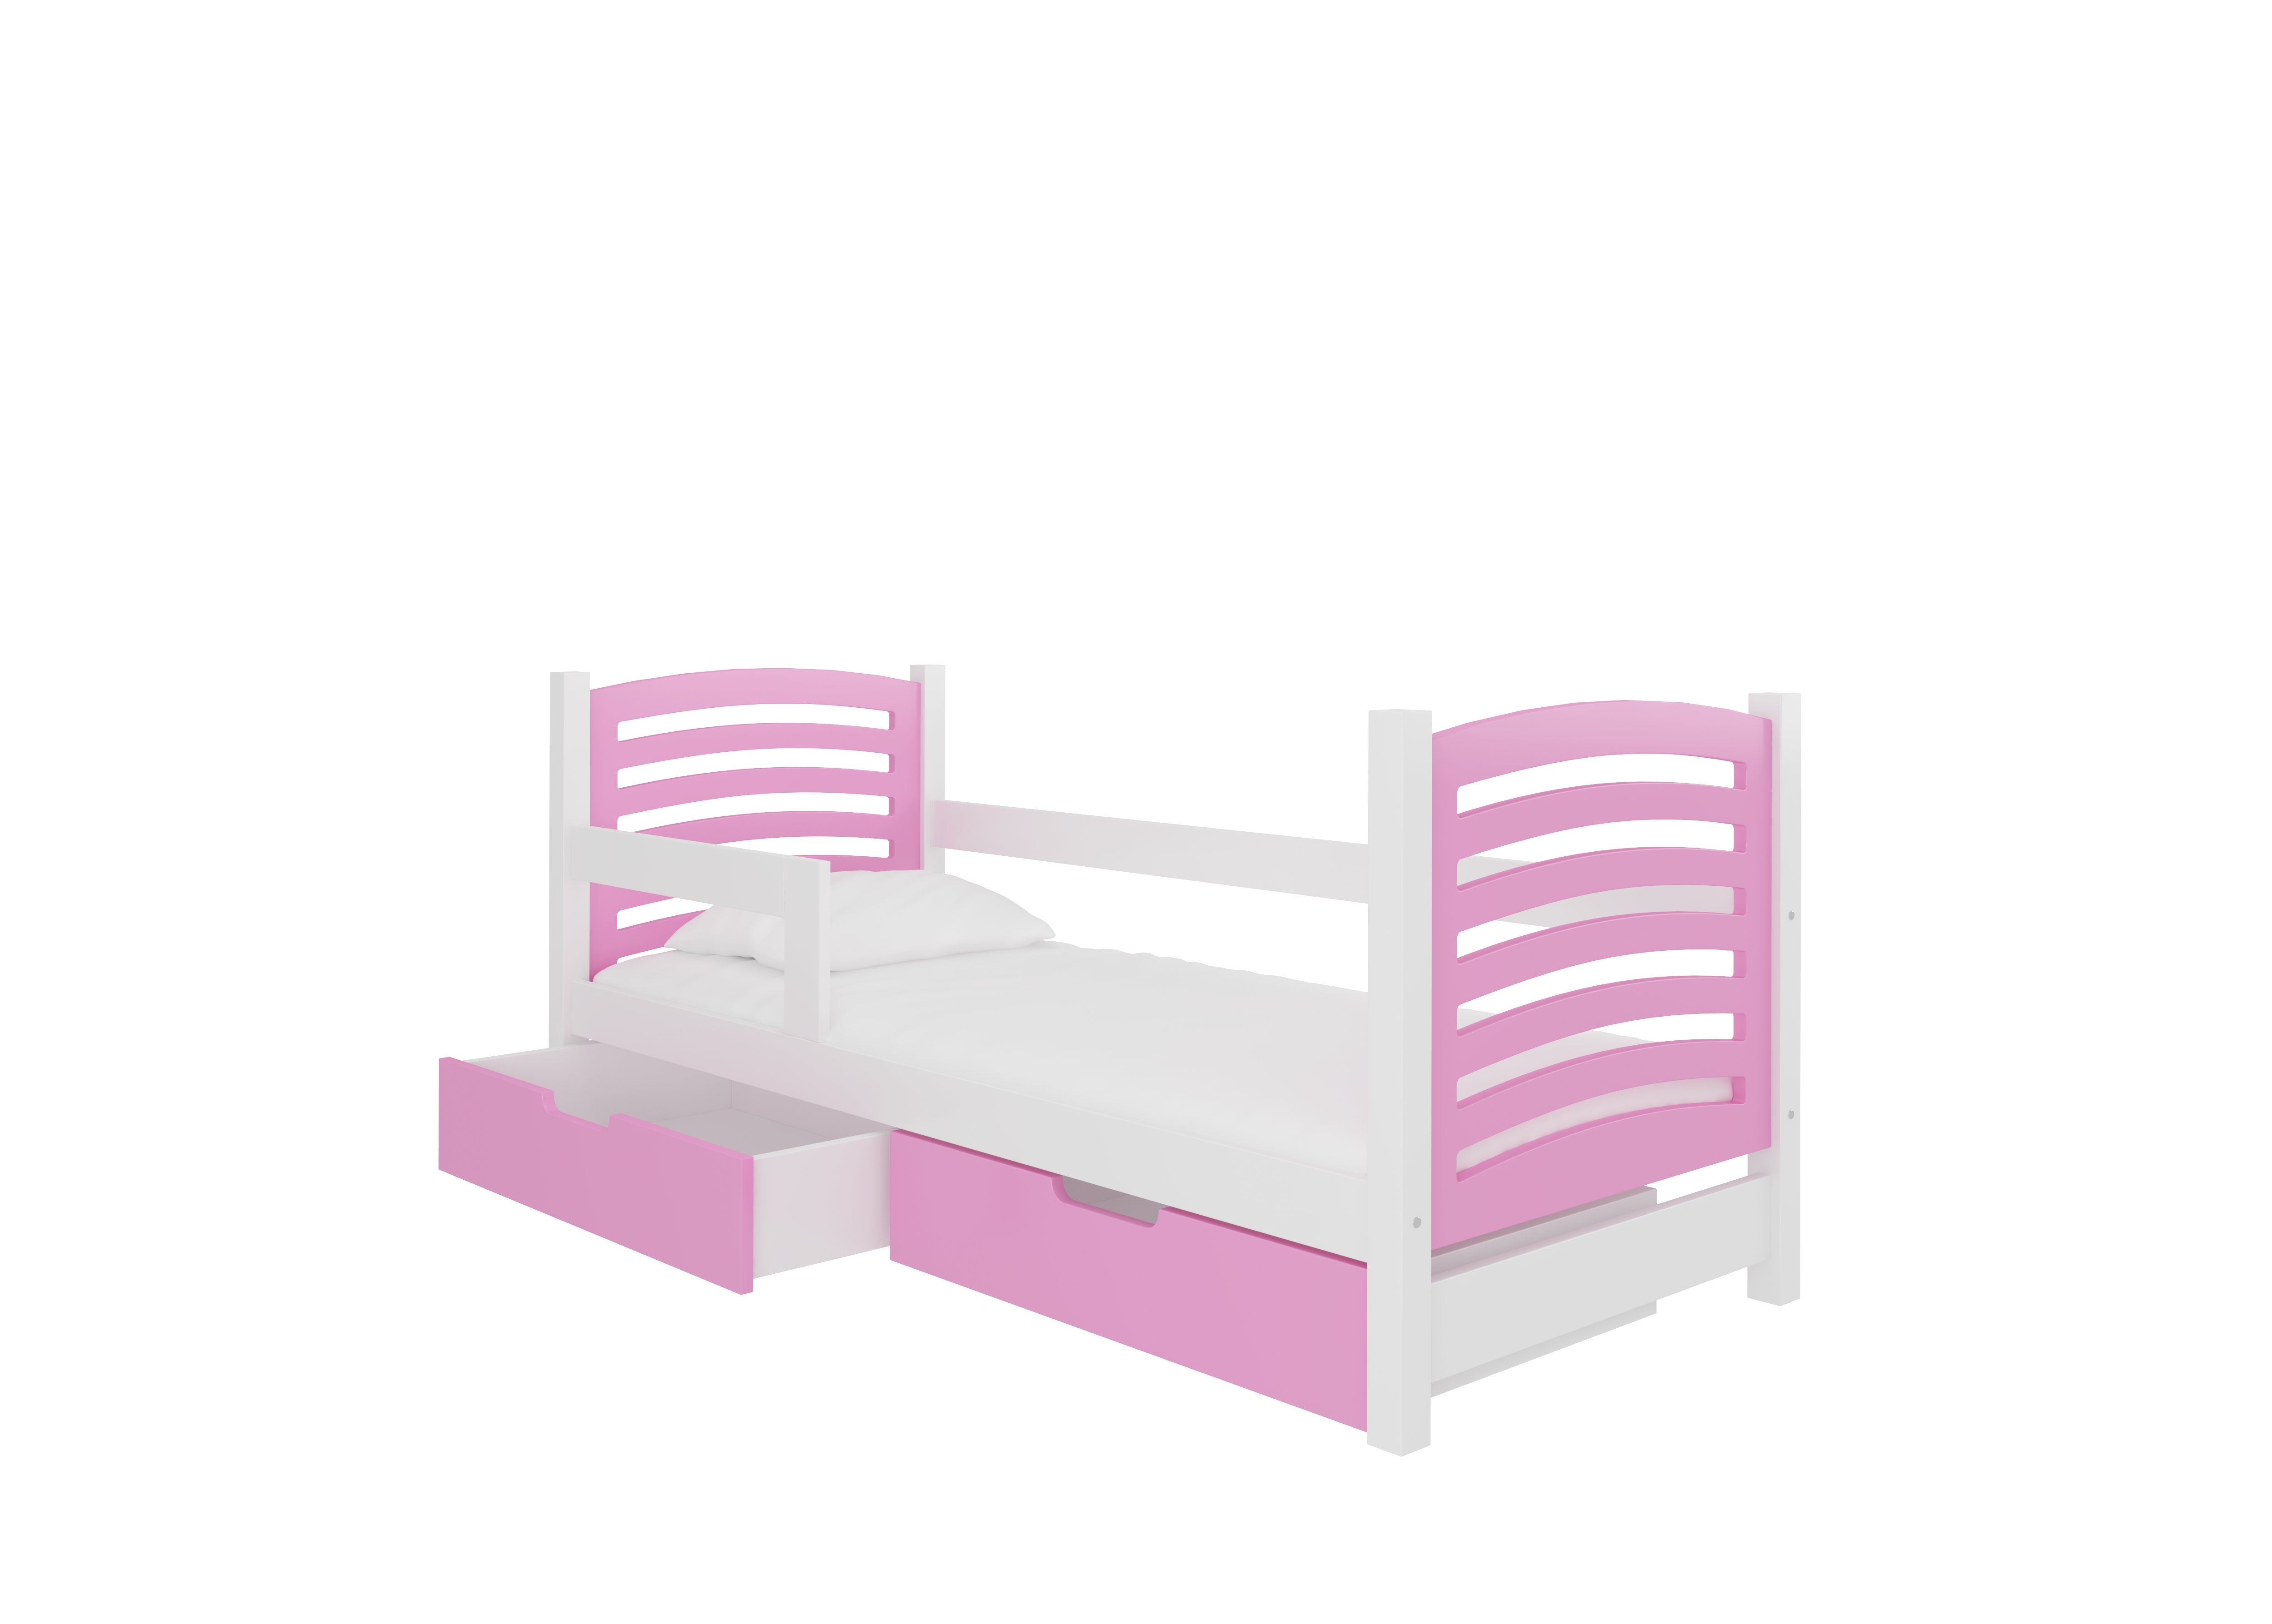 Dětská postel Camino Rám: Bílá, Čela a šuplíky: Růžová - Bílá,Růžová